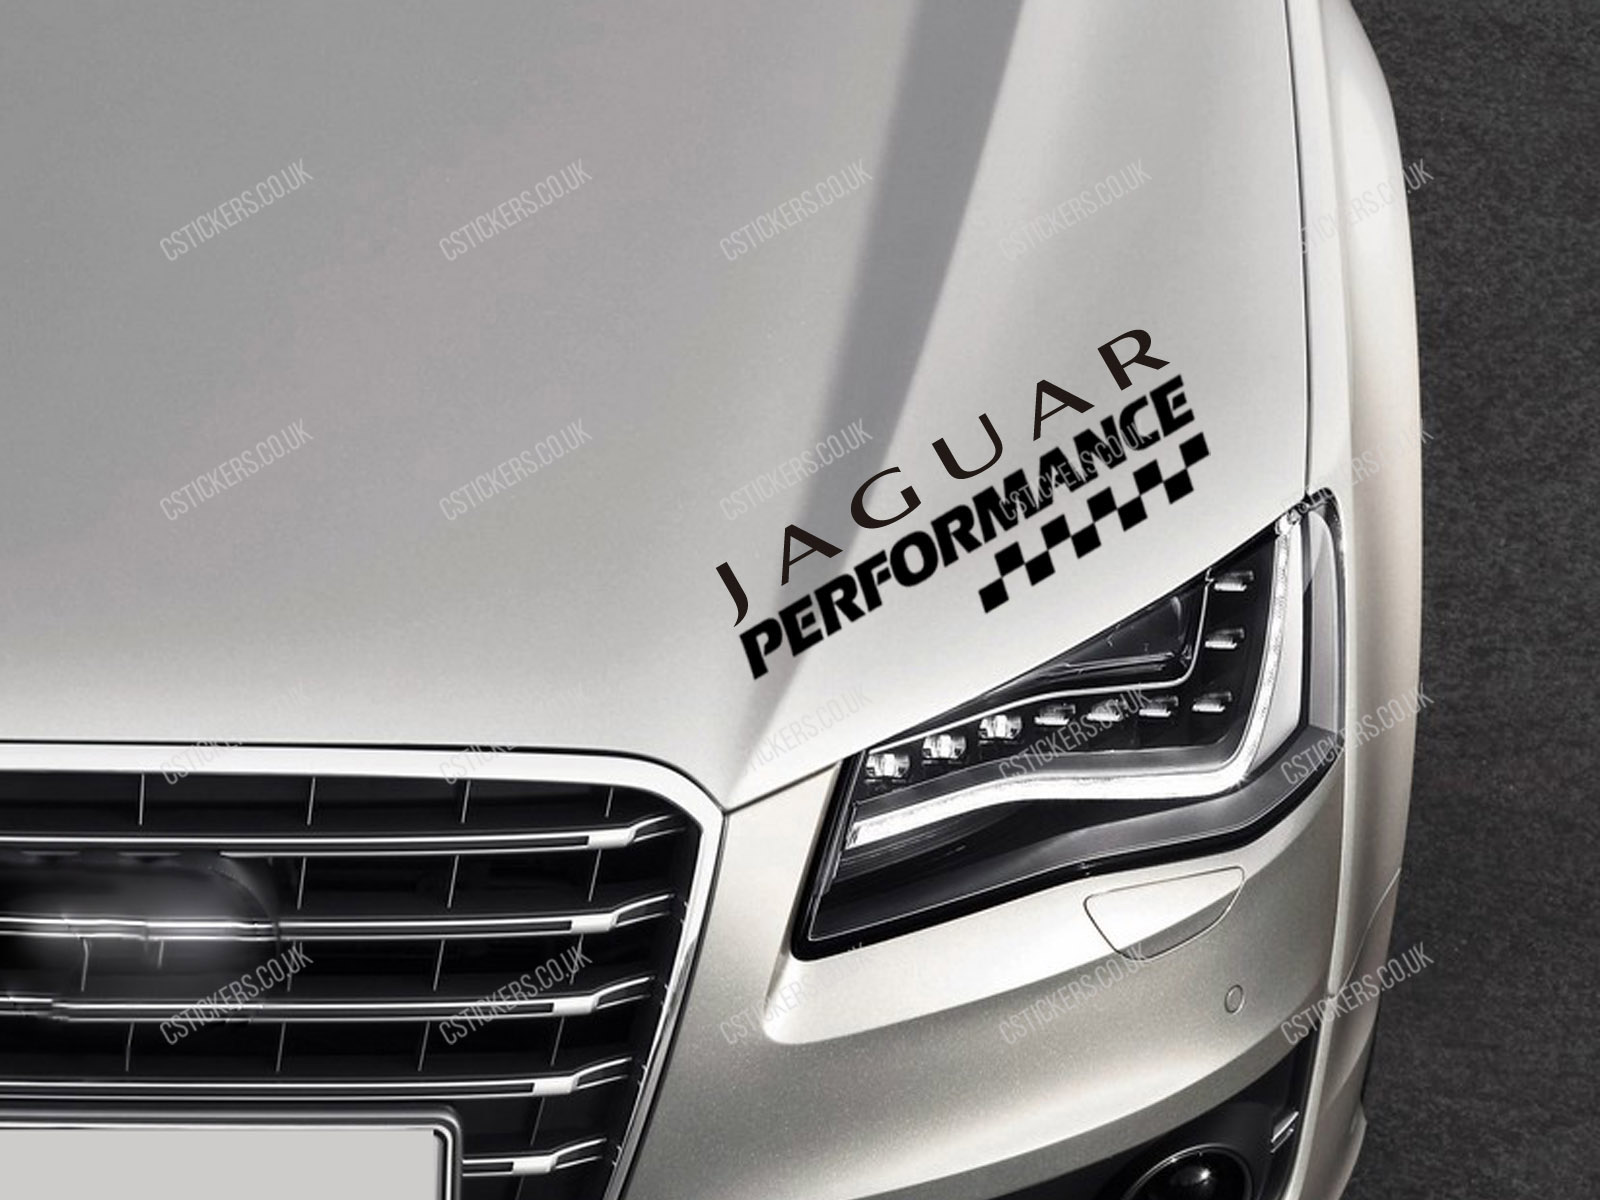 Jaguar Performance Sticker for Bonnet